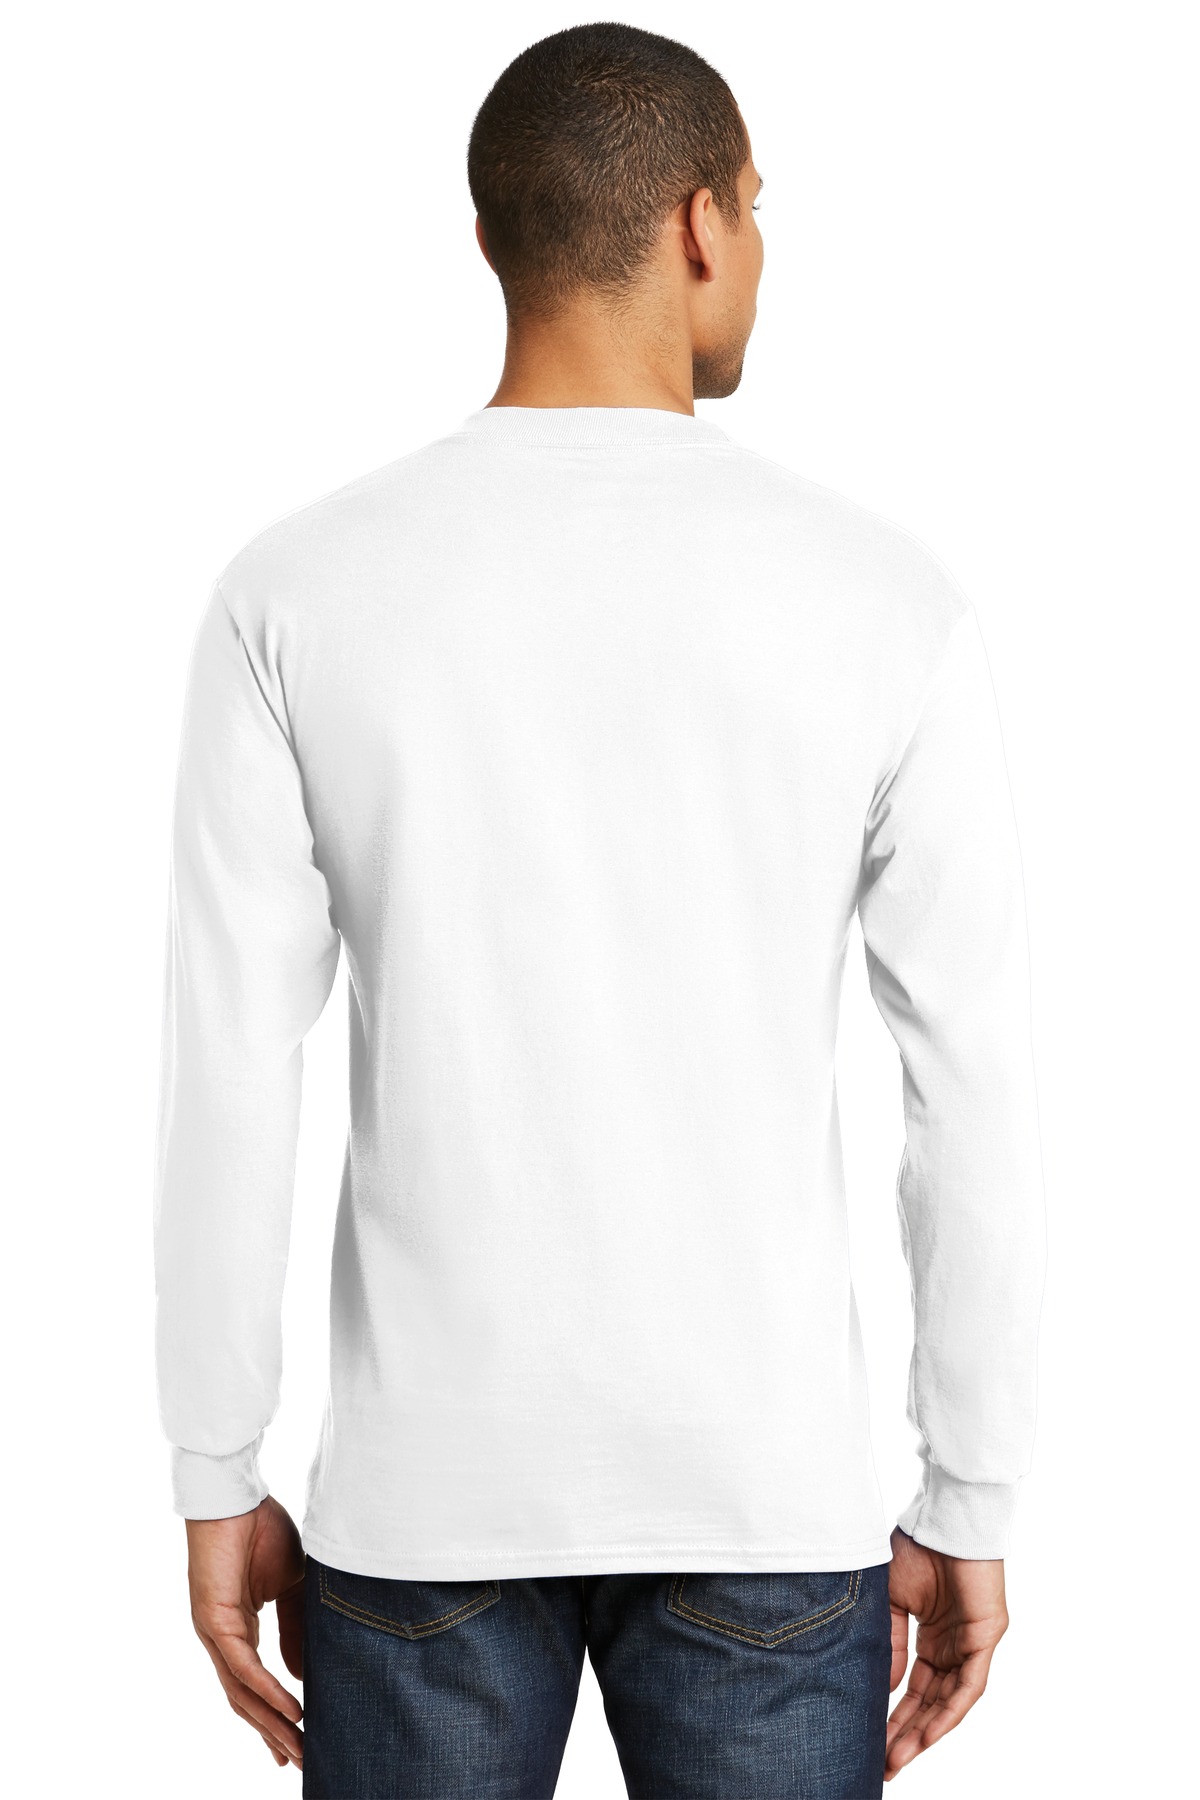 Hanes ® Beefy-T ® - 100% Cotton Long Sleeve T-Shirt. 5186 - Custom ...